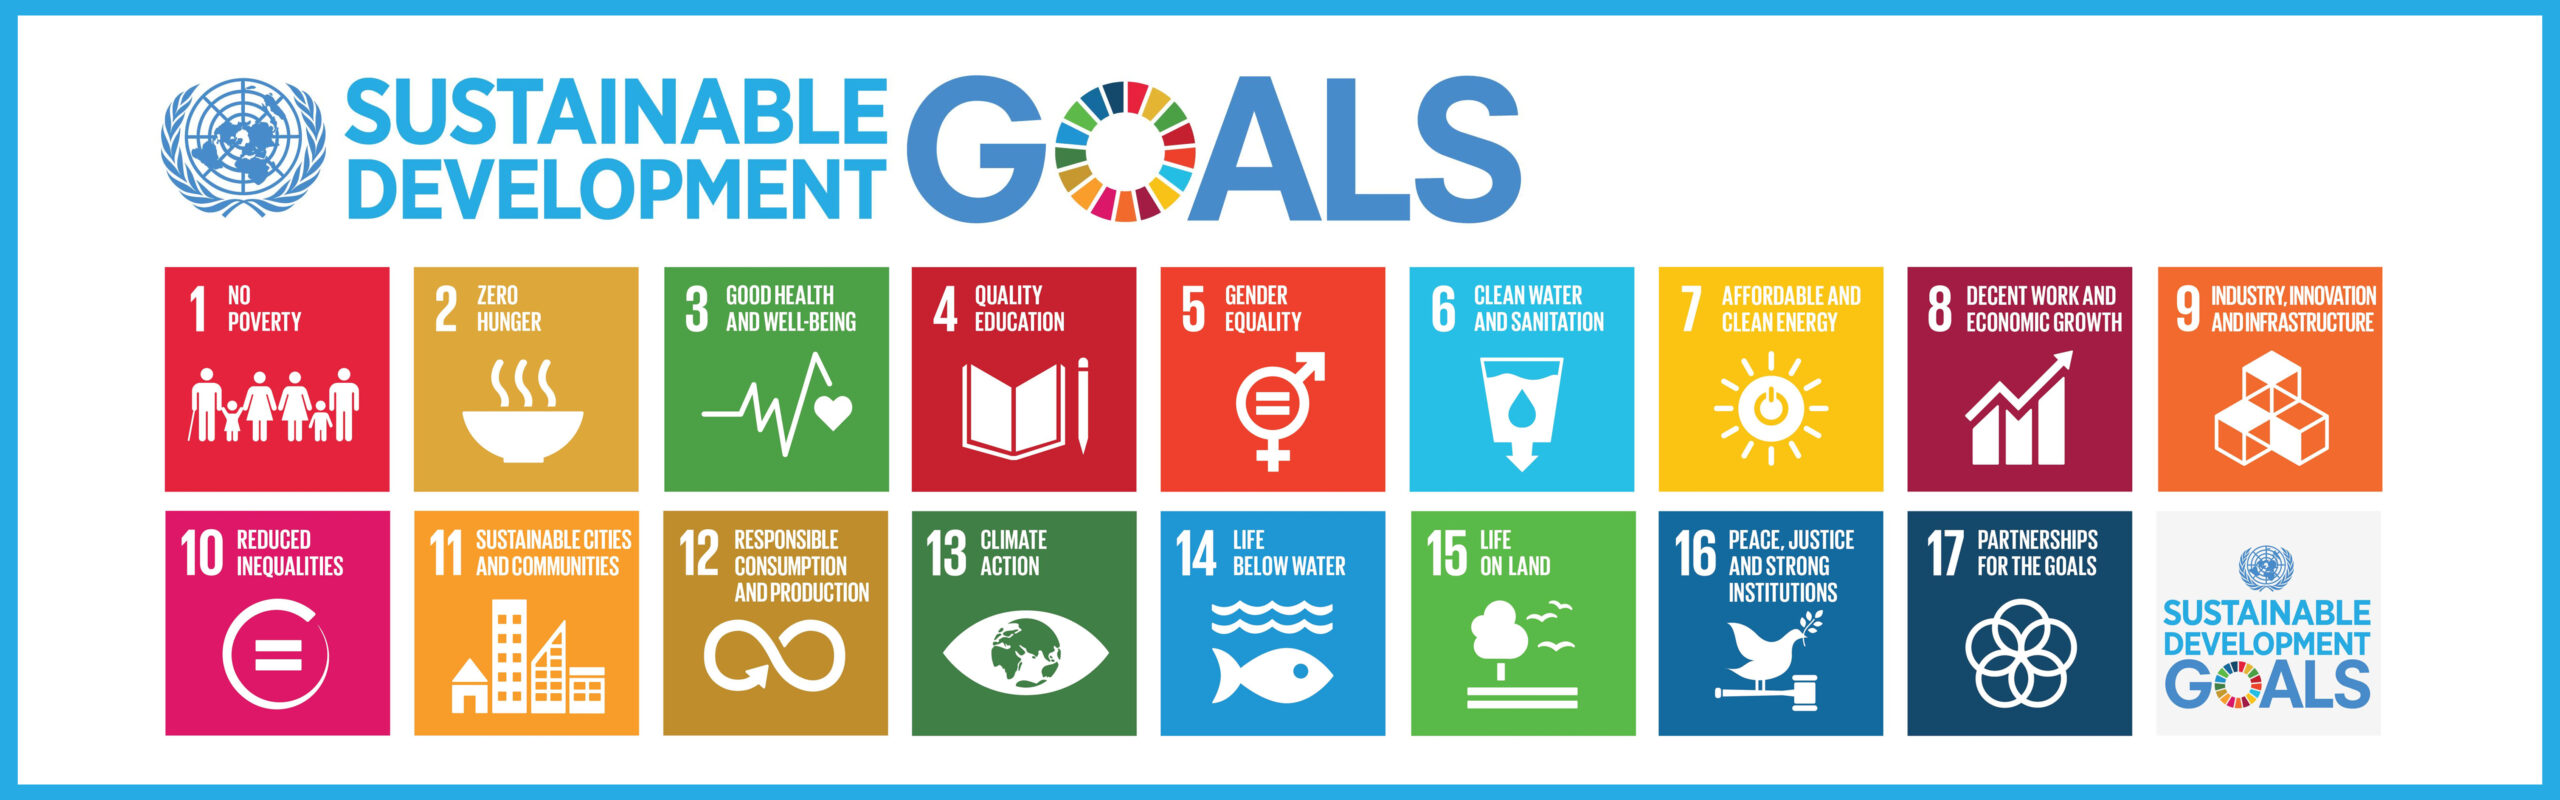 Uniqova contributes towards the Sustainable Development Goals